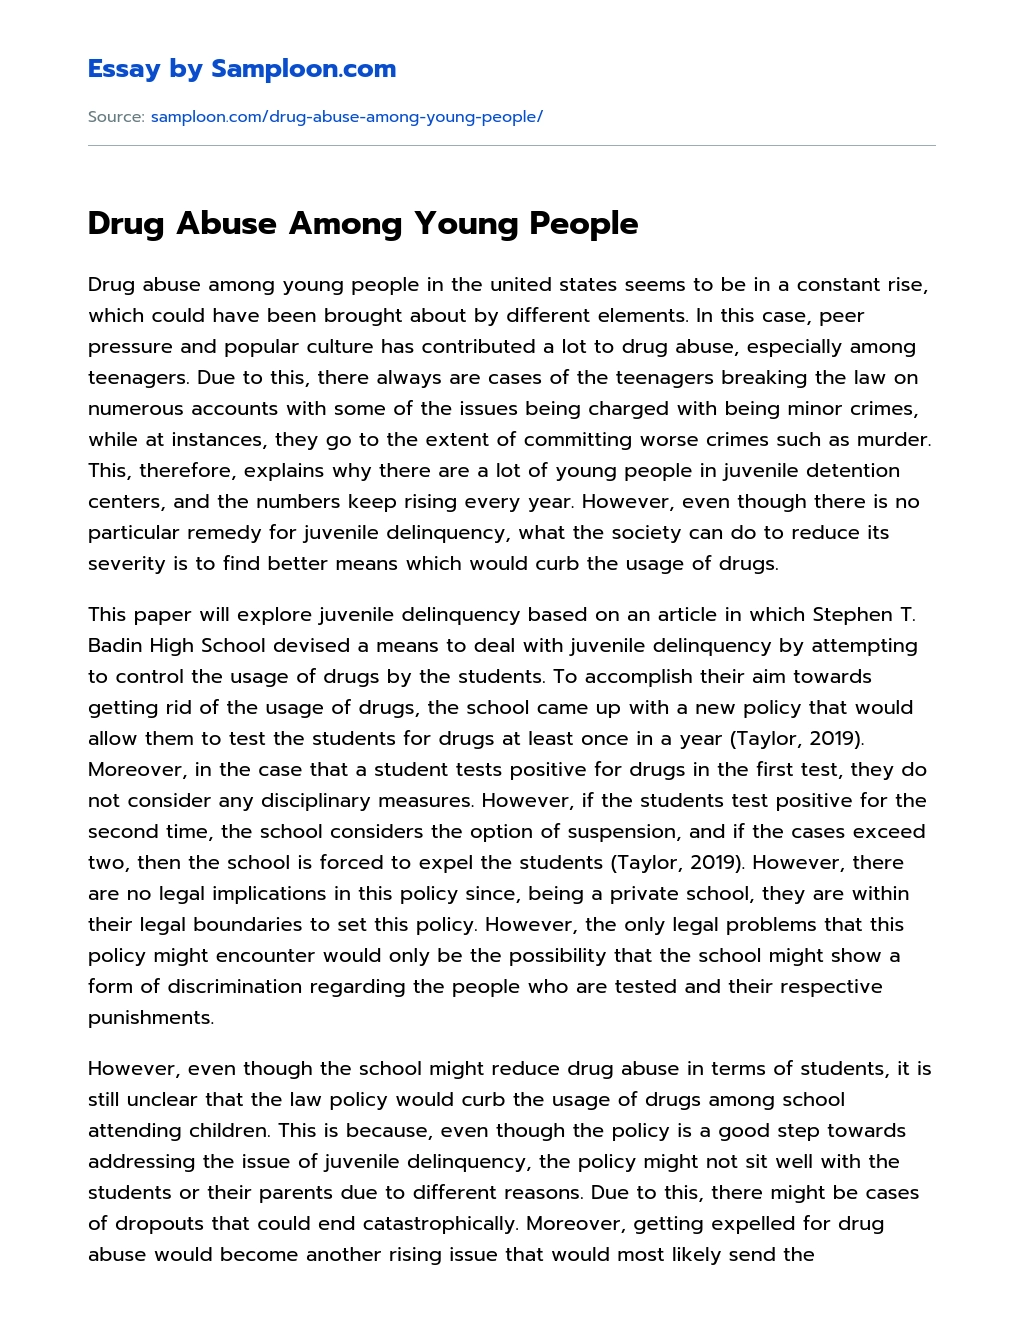 Drug Abuse Among Young People essay